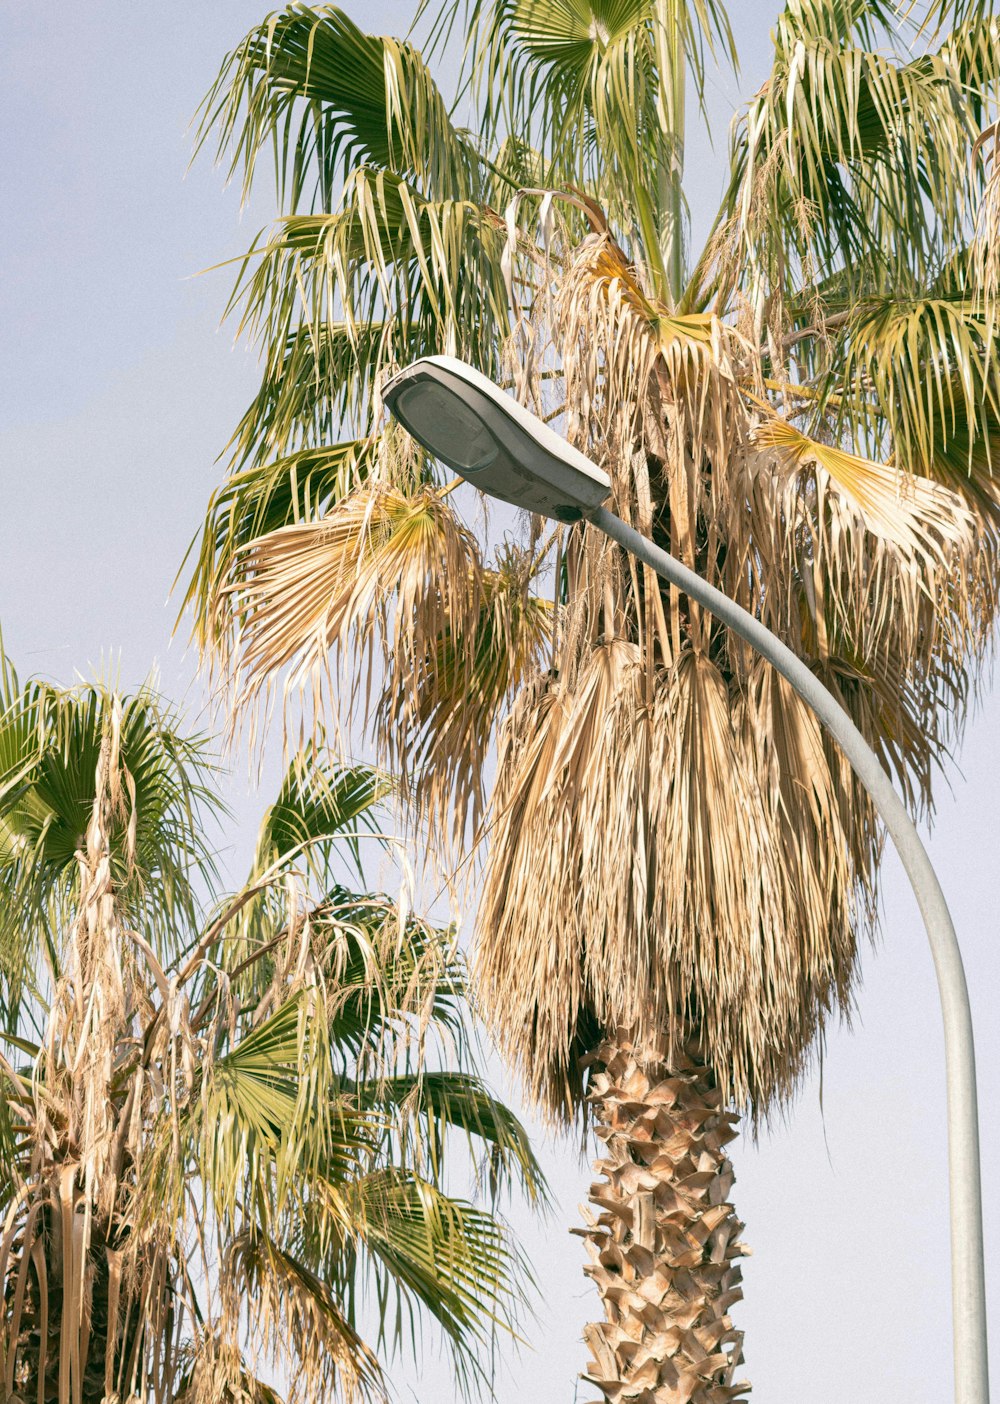 a street light and palm trees against a blue sky